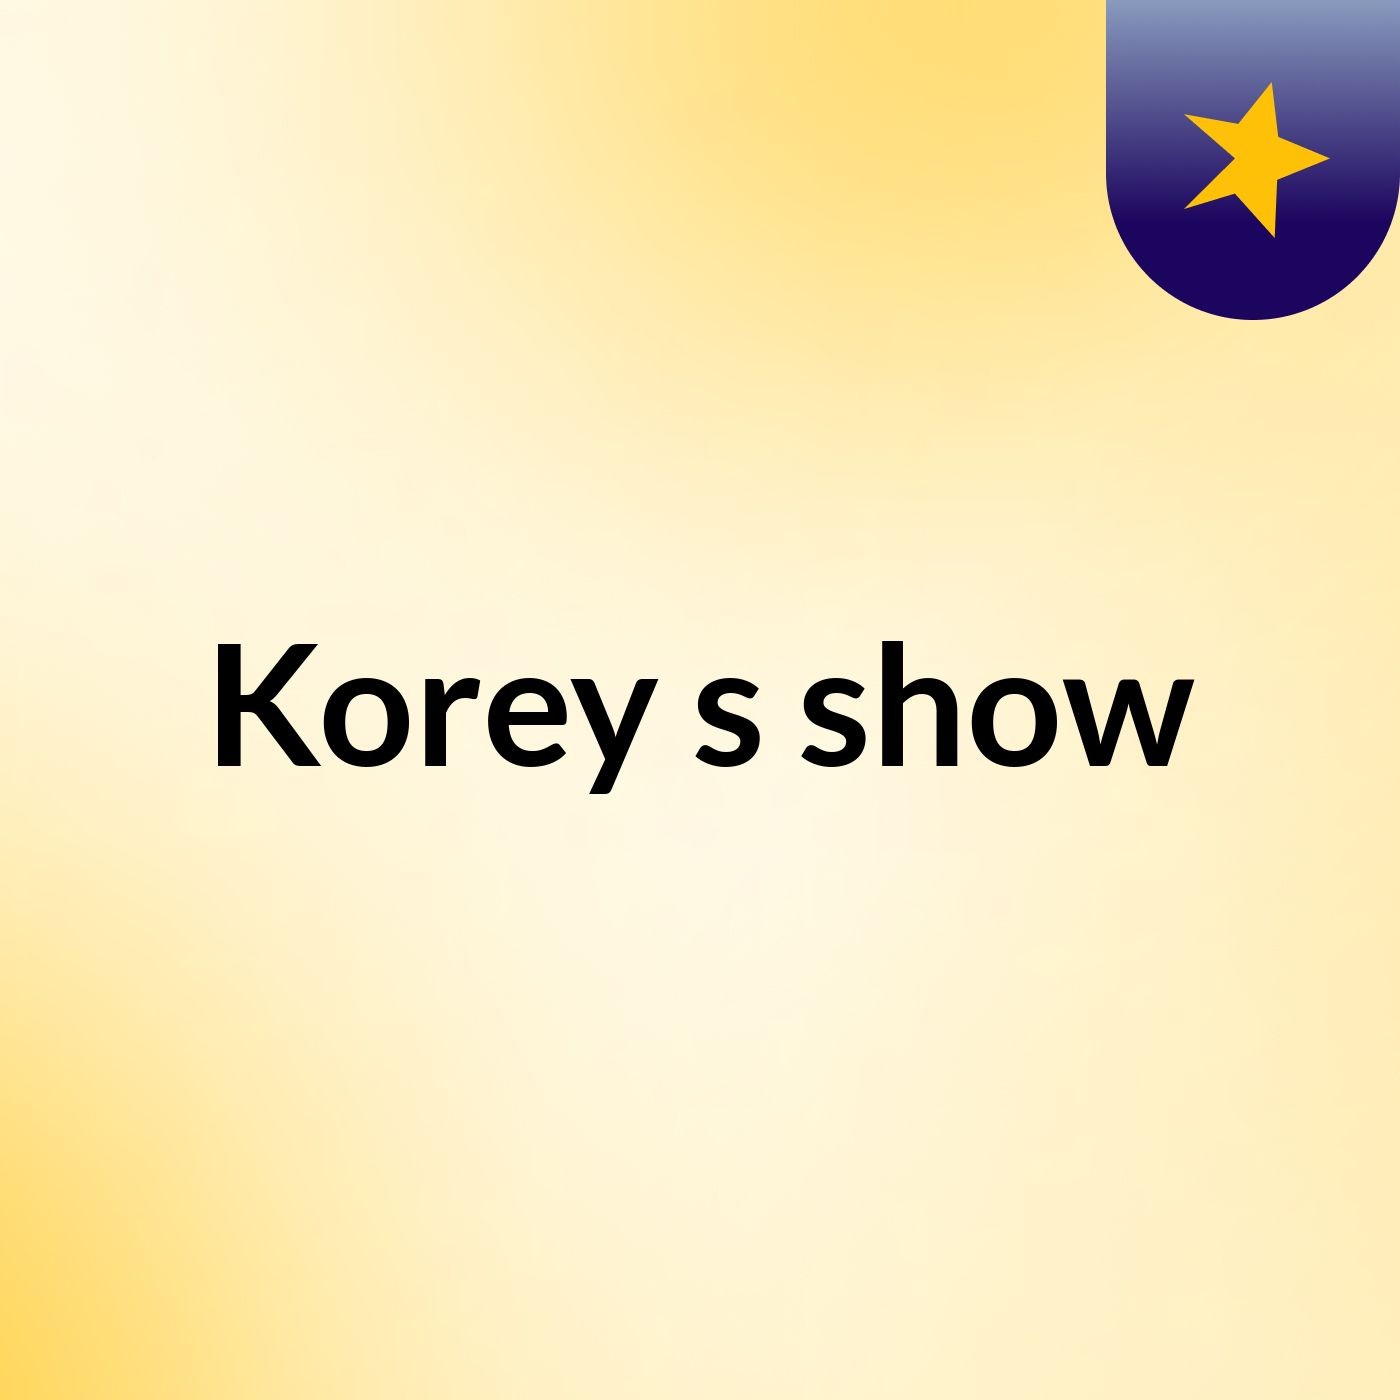 Korey's show